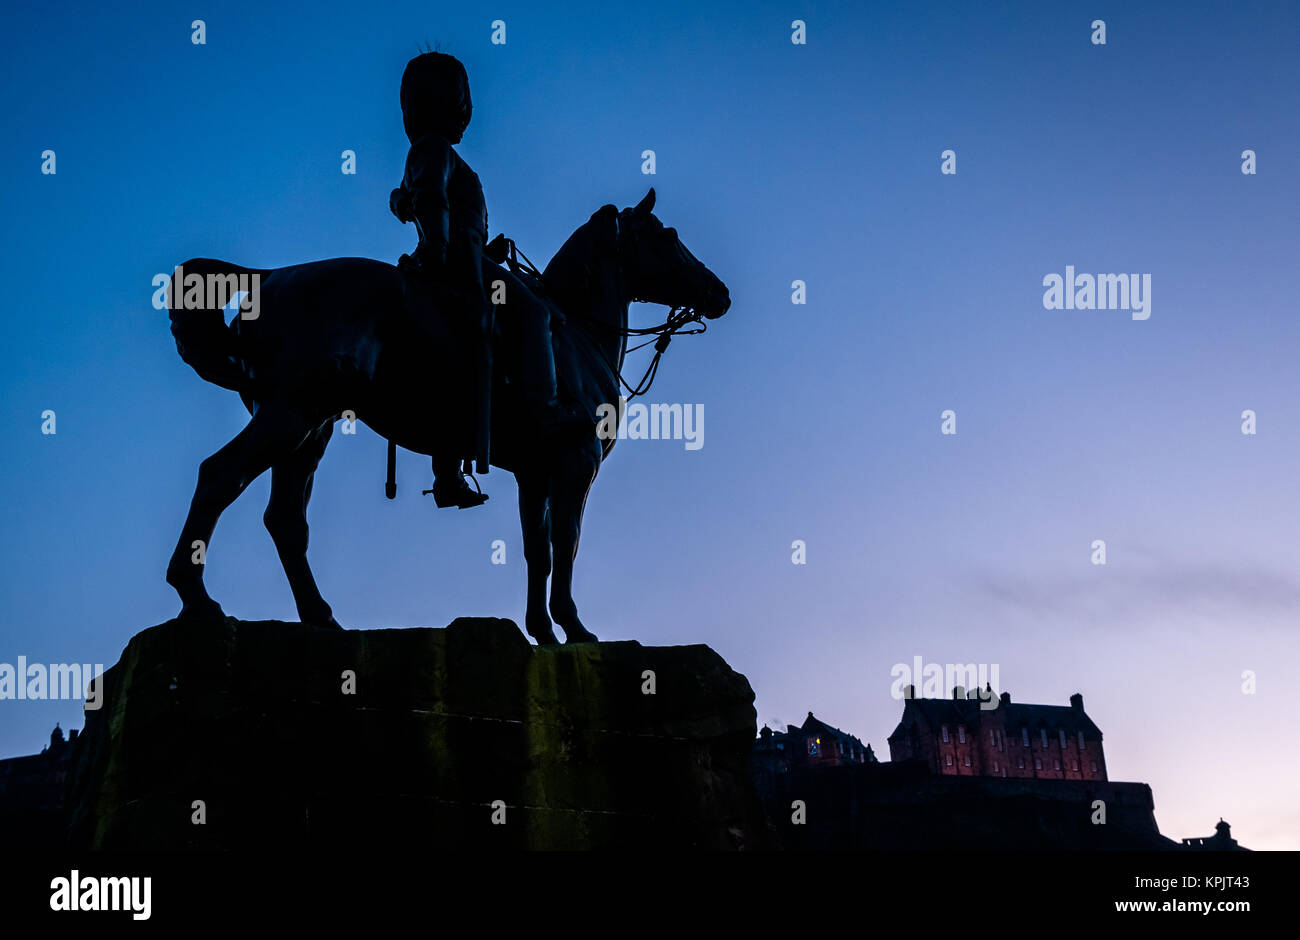 Silhouette Royal Scots Greys Monument soldier on horseback by William Birnie Rhind, Edinburgh Castle, Princes Street, Edinburgh, Scotland, UK at dusk Stock Photo